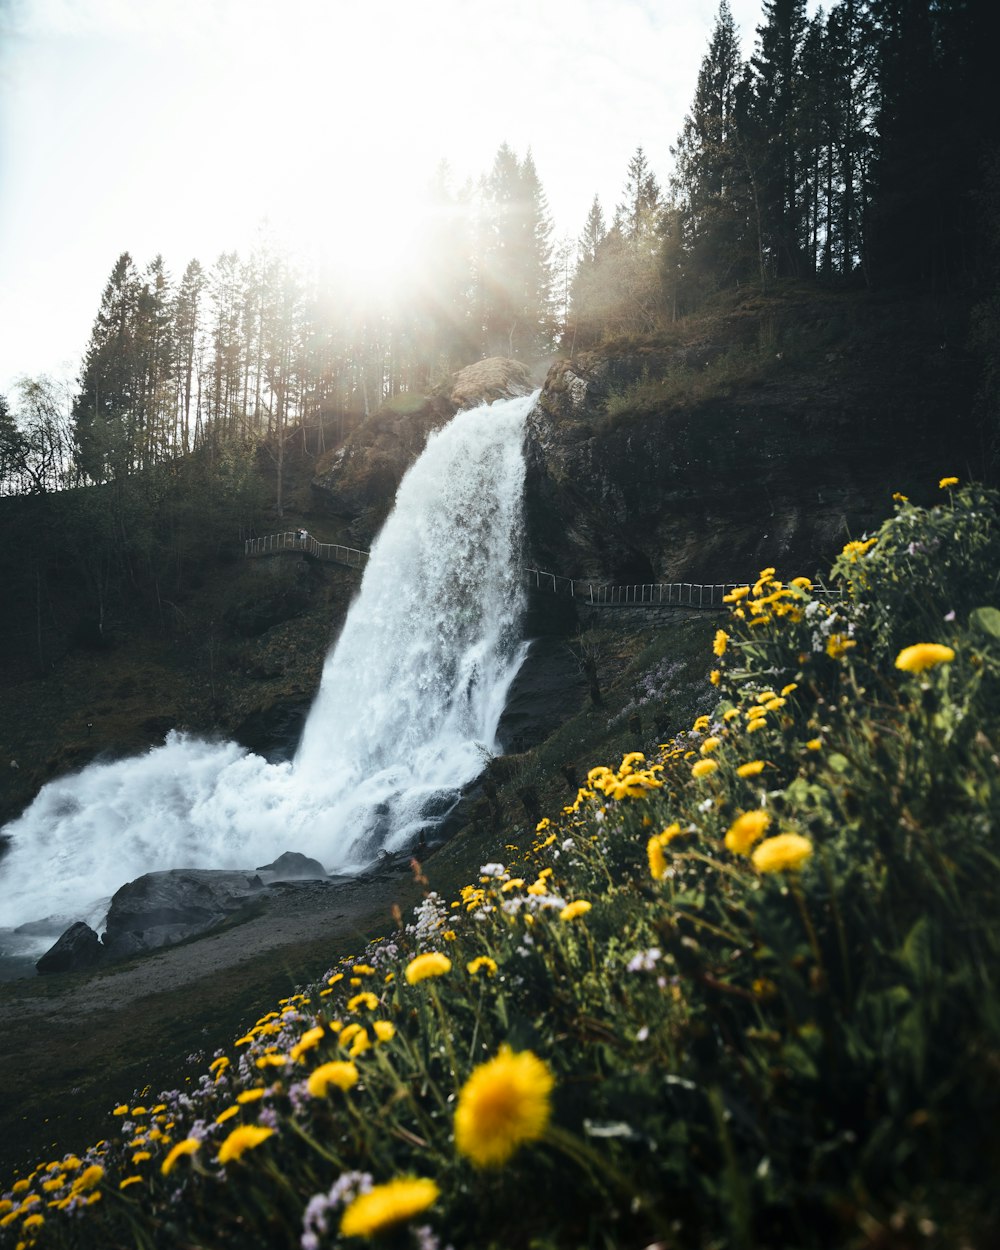 yellow flowers near waterfalls during daytime